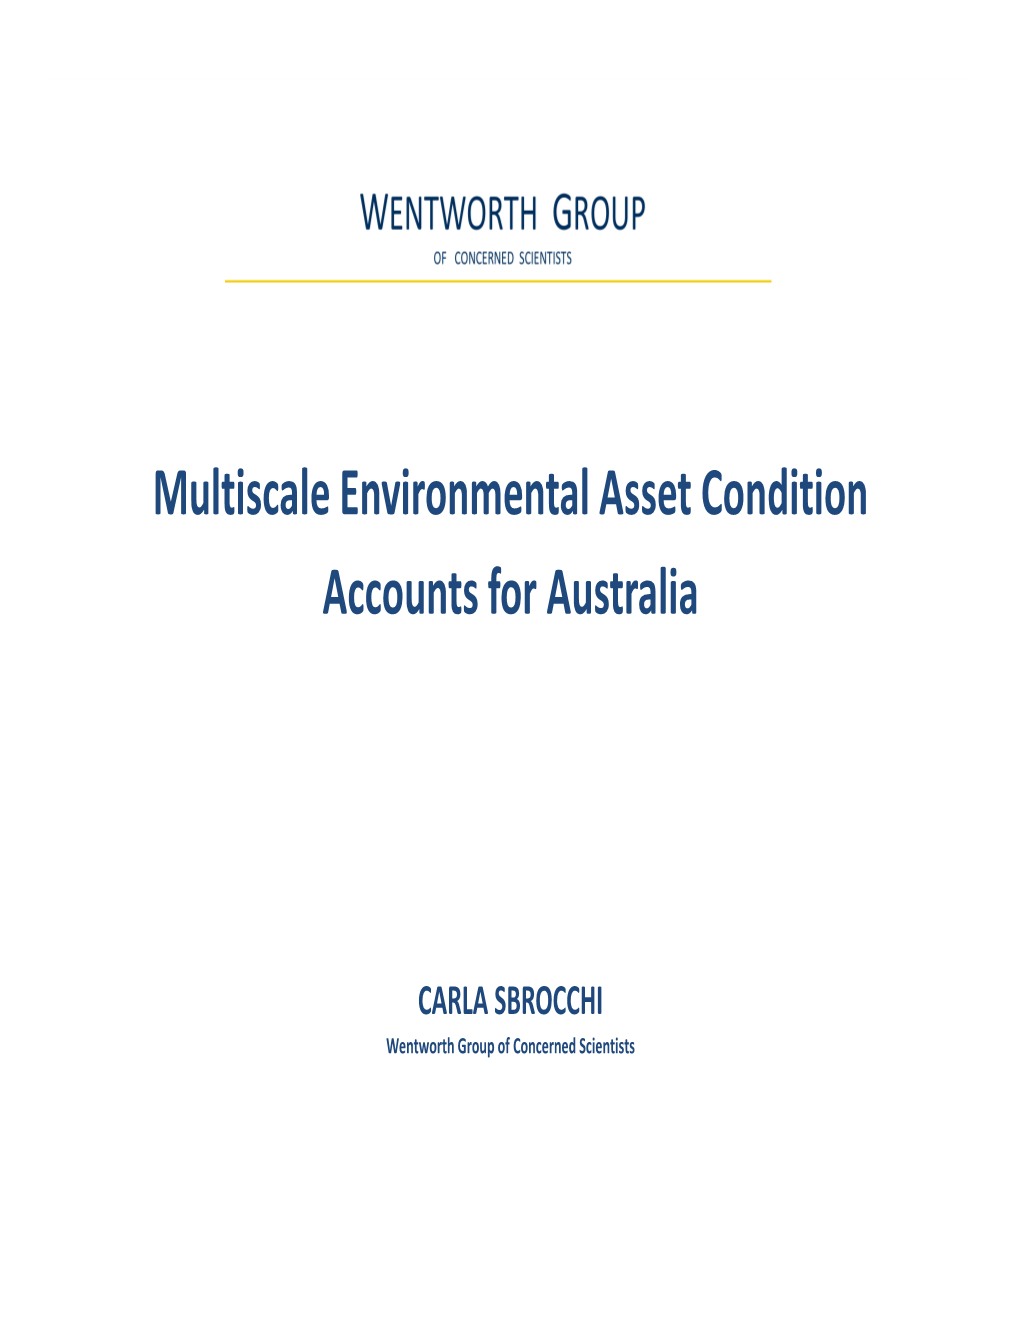 Multiscale Environmental Asset Condition Accounts for Australia